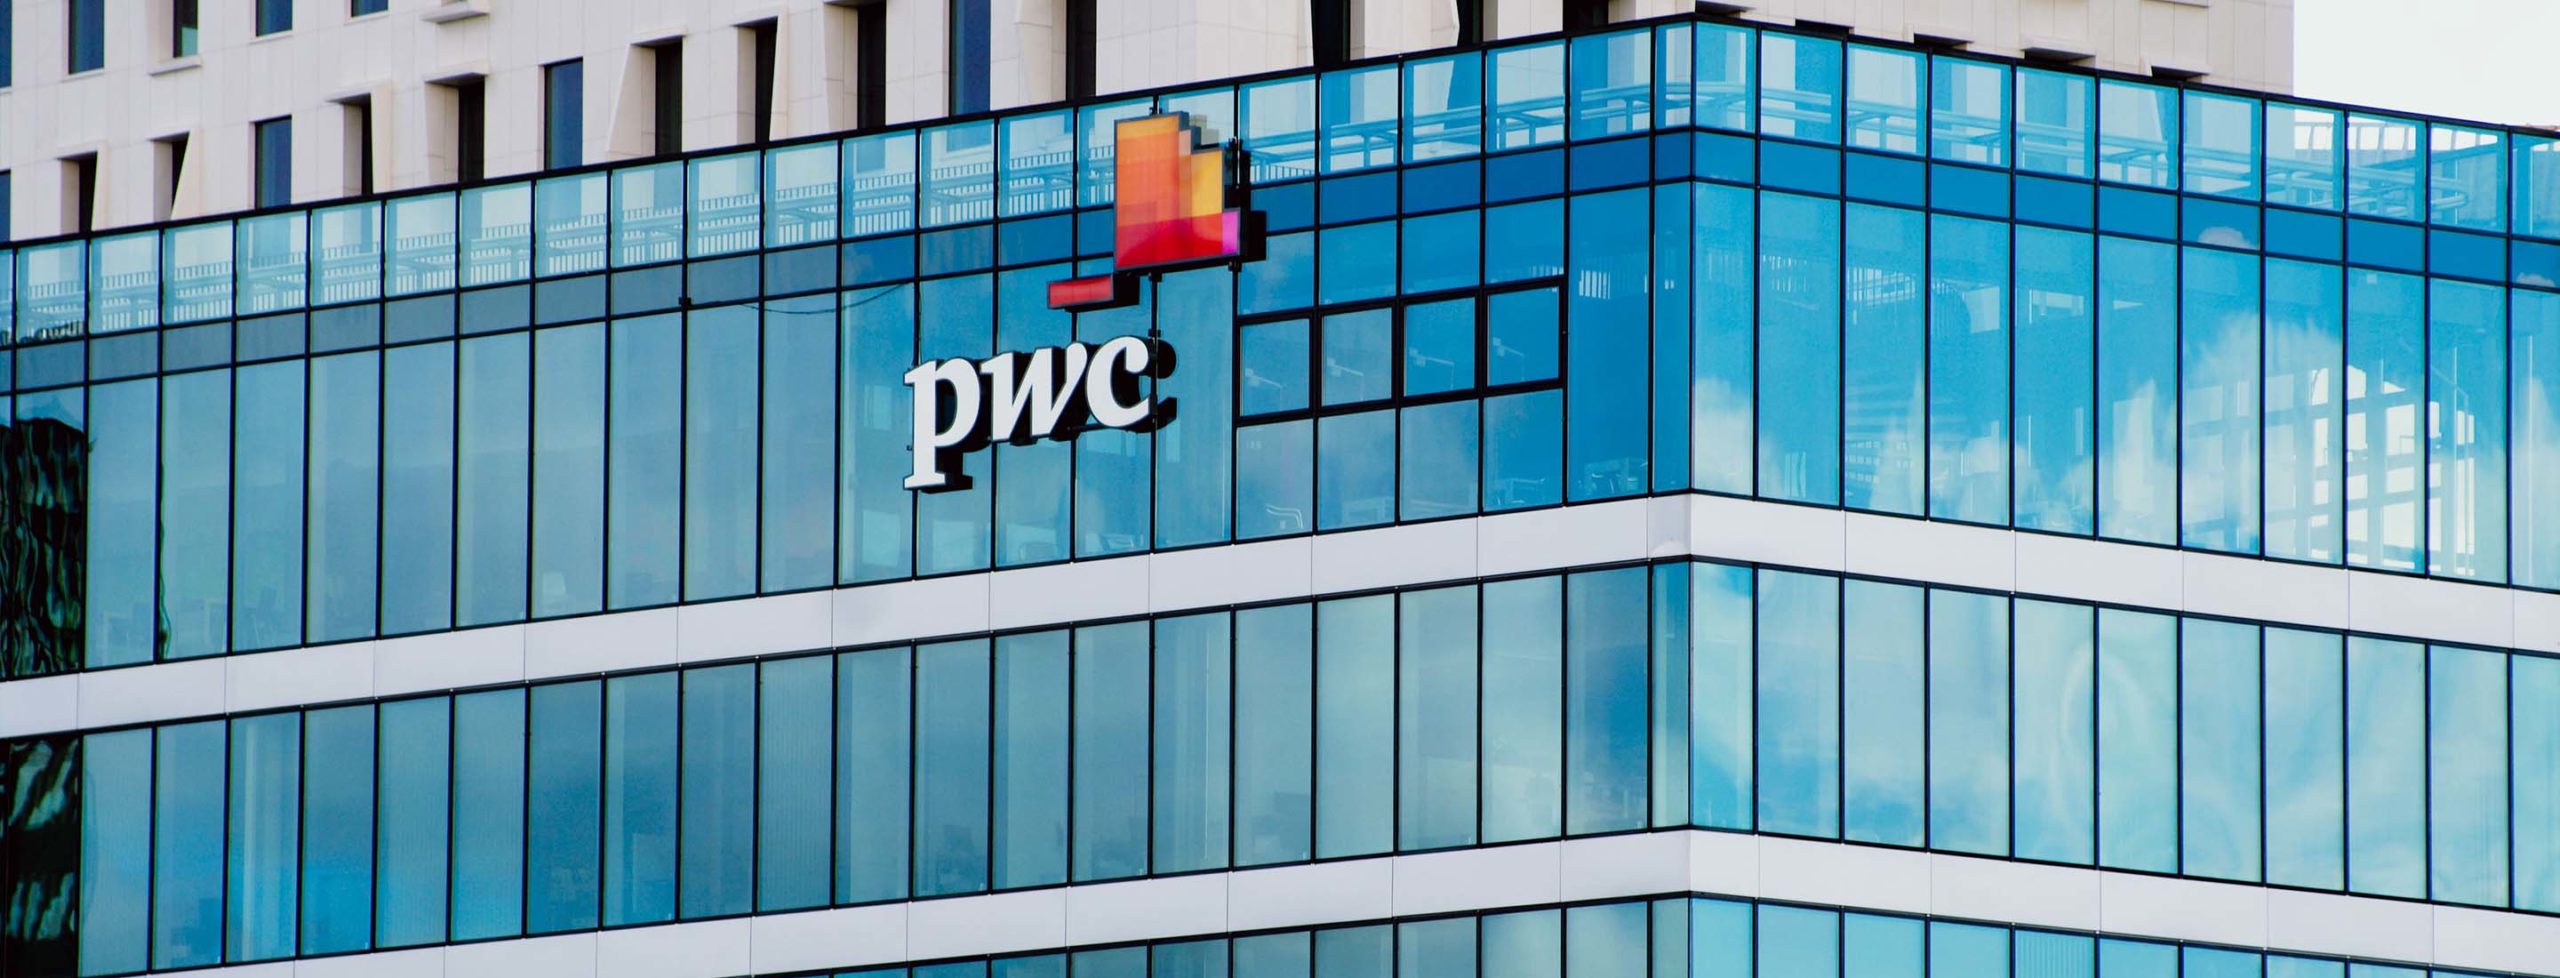 PWC Building Image